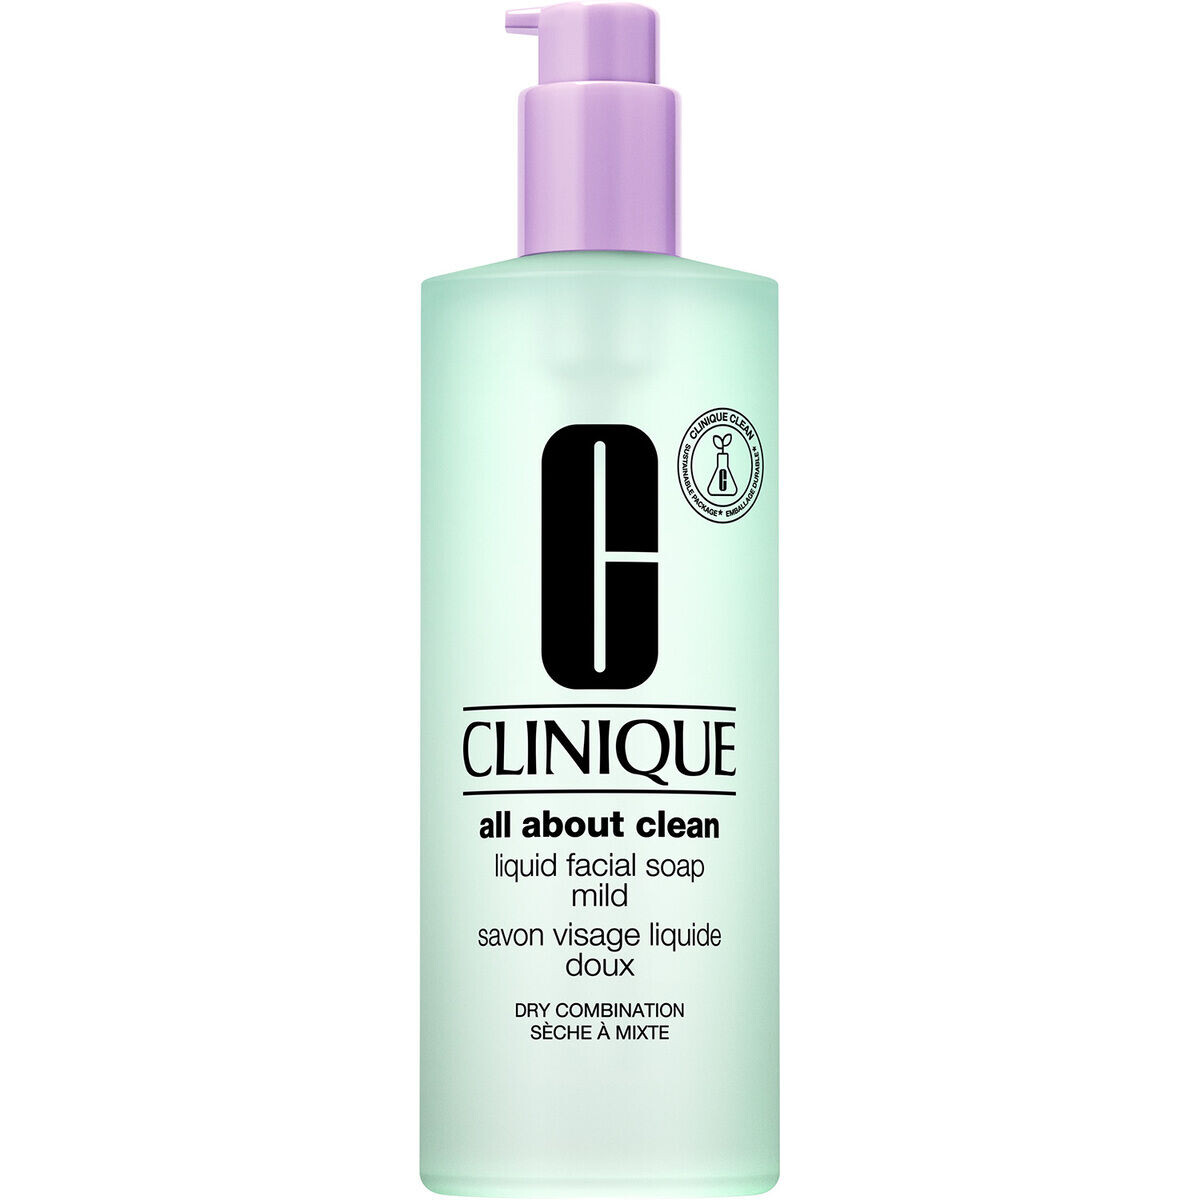 Clinique Jumbo Liquid Facial Soap Mild dry Skin